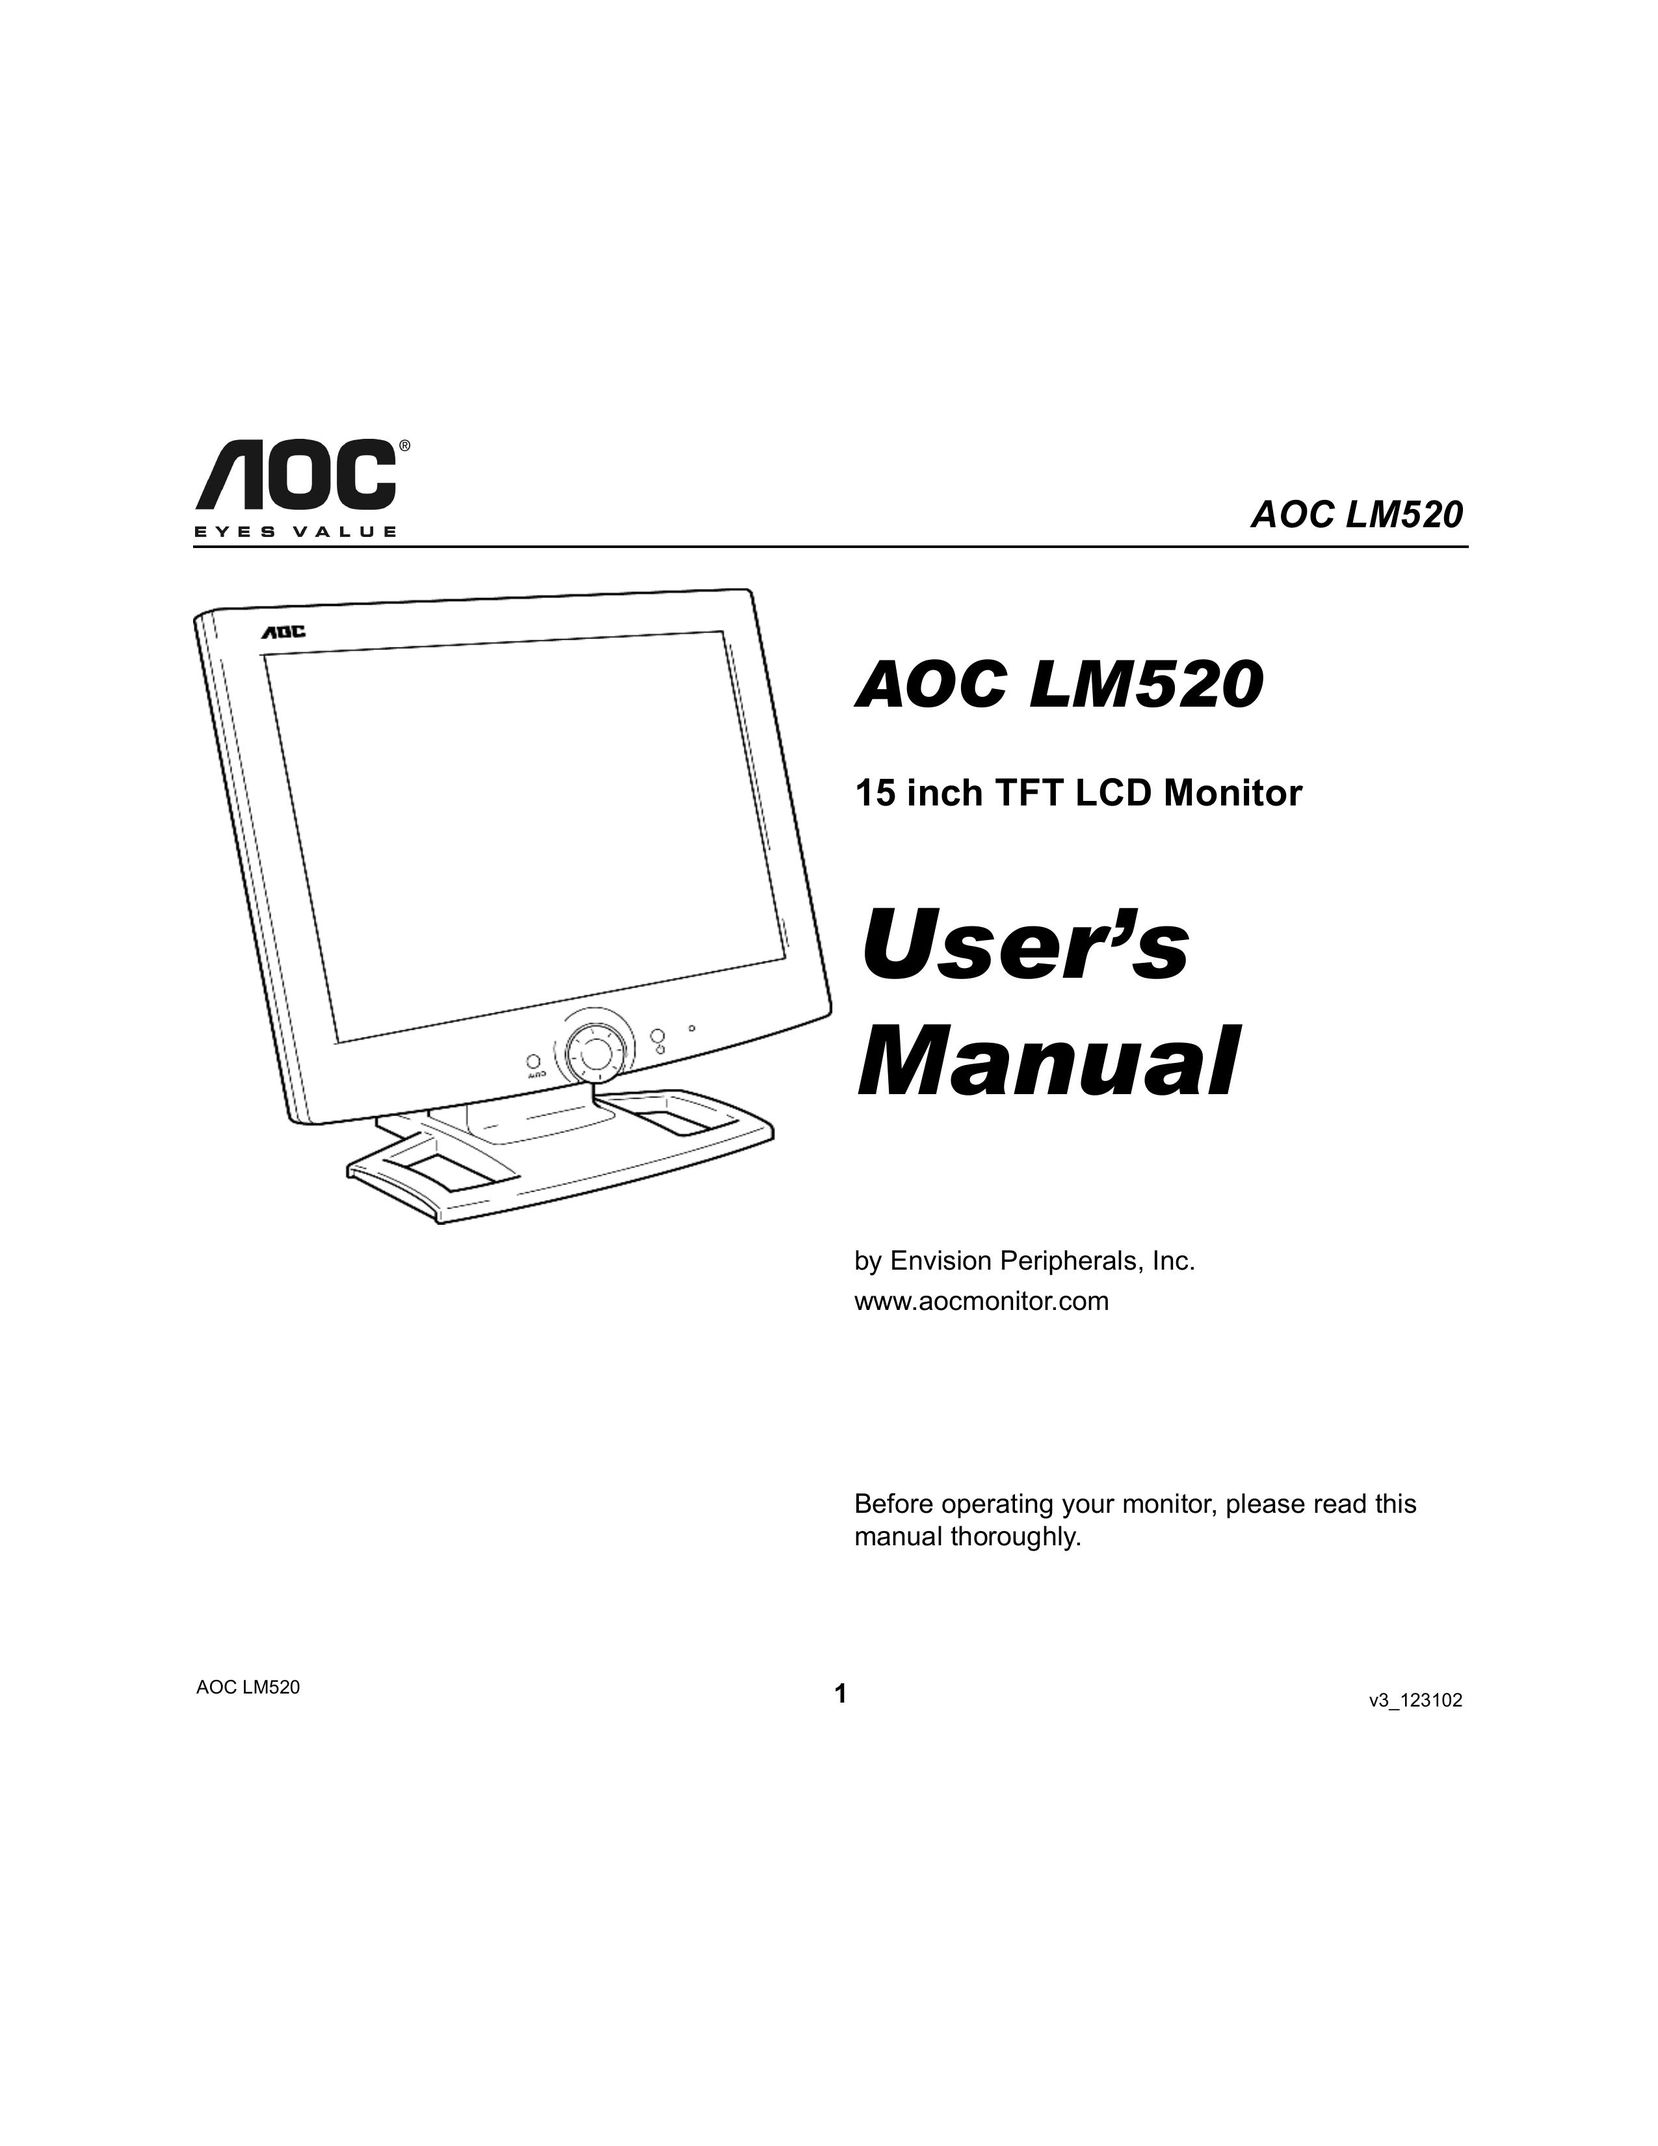 Ergotron AOC LM520 Computer Monitor User Manual